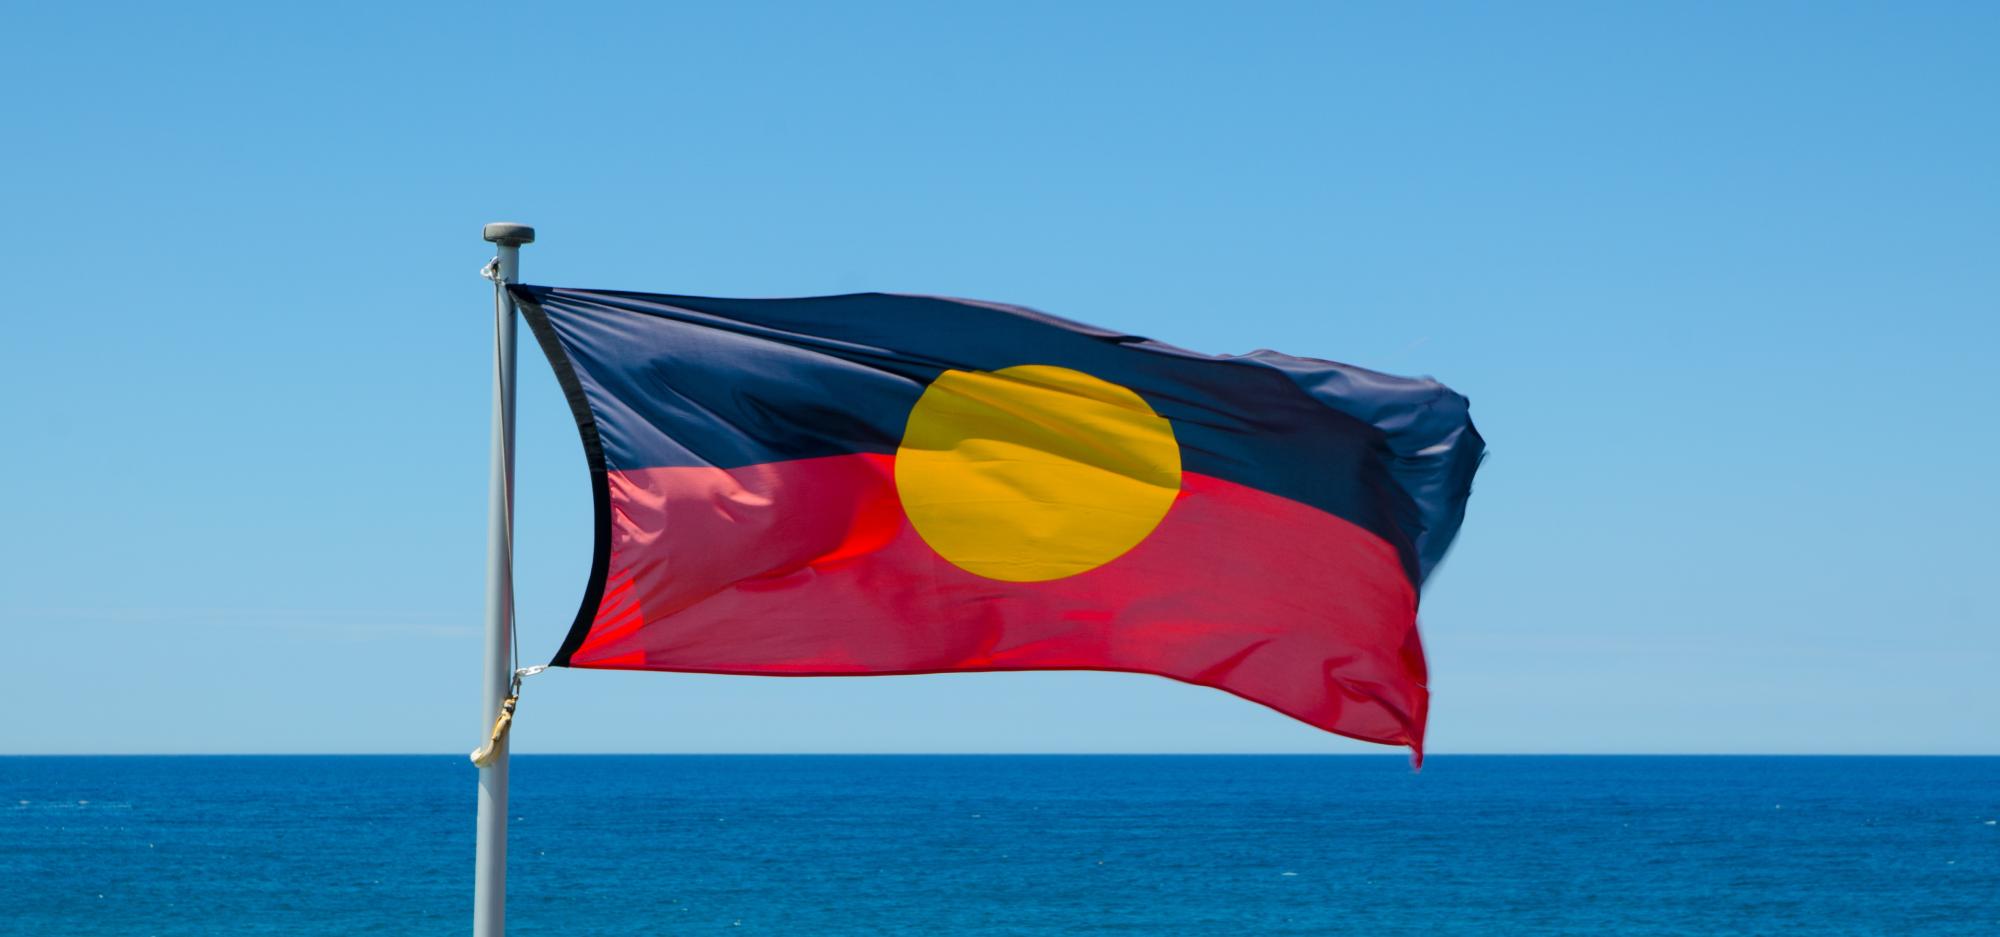 The Aboriginal and Torres Strait Islander flag flies against a bright blue sky